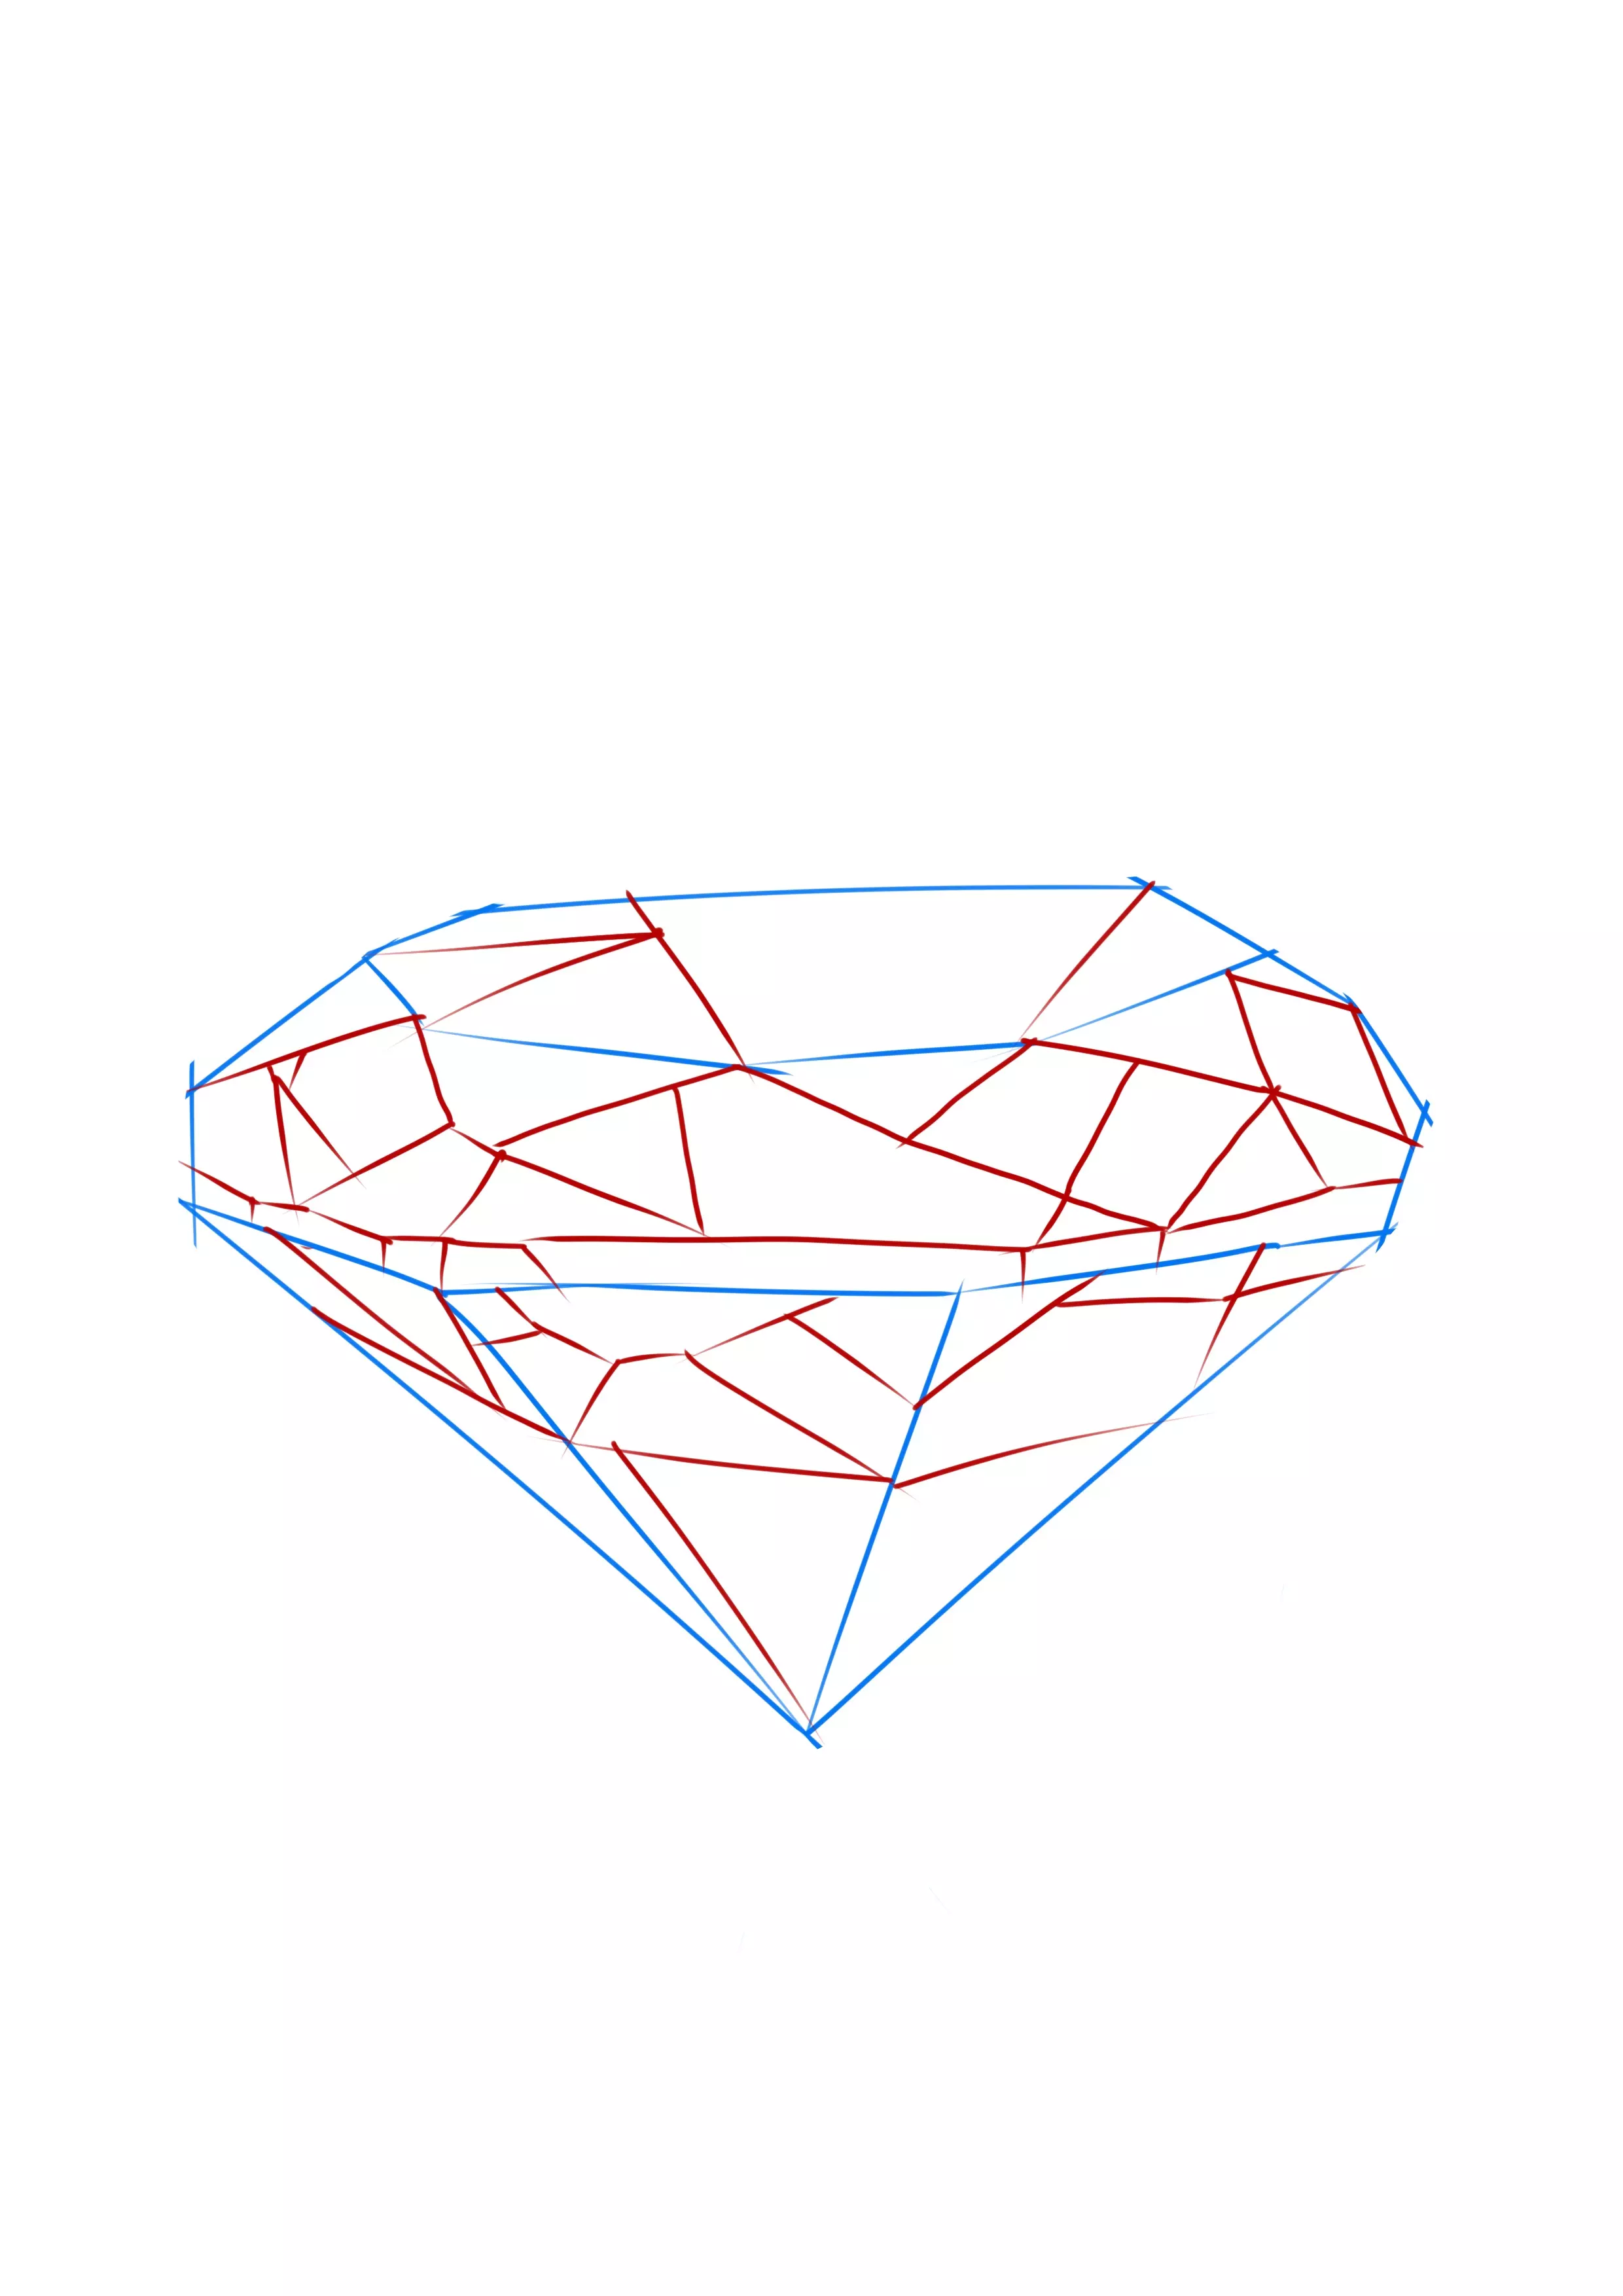 dessin fini de la base du diamant